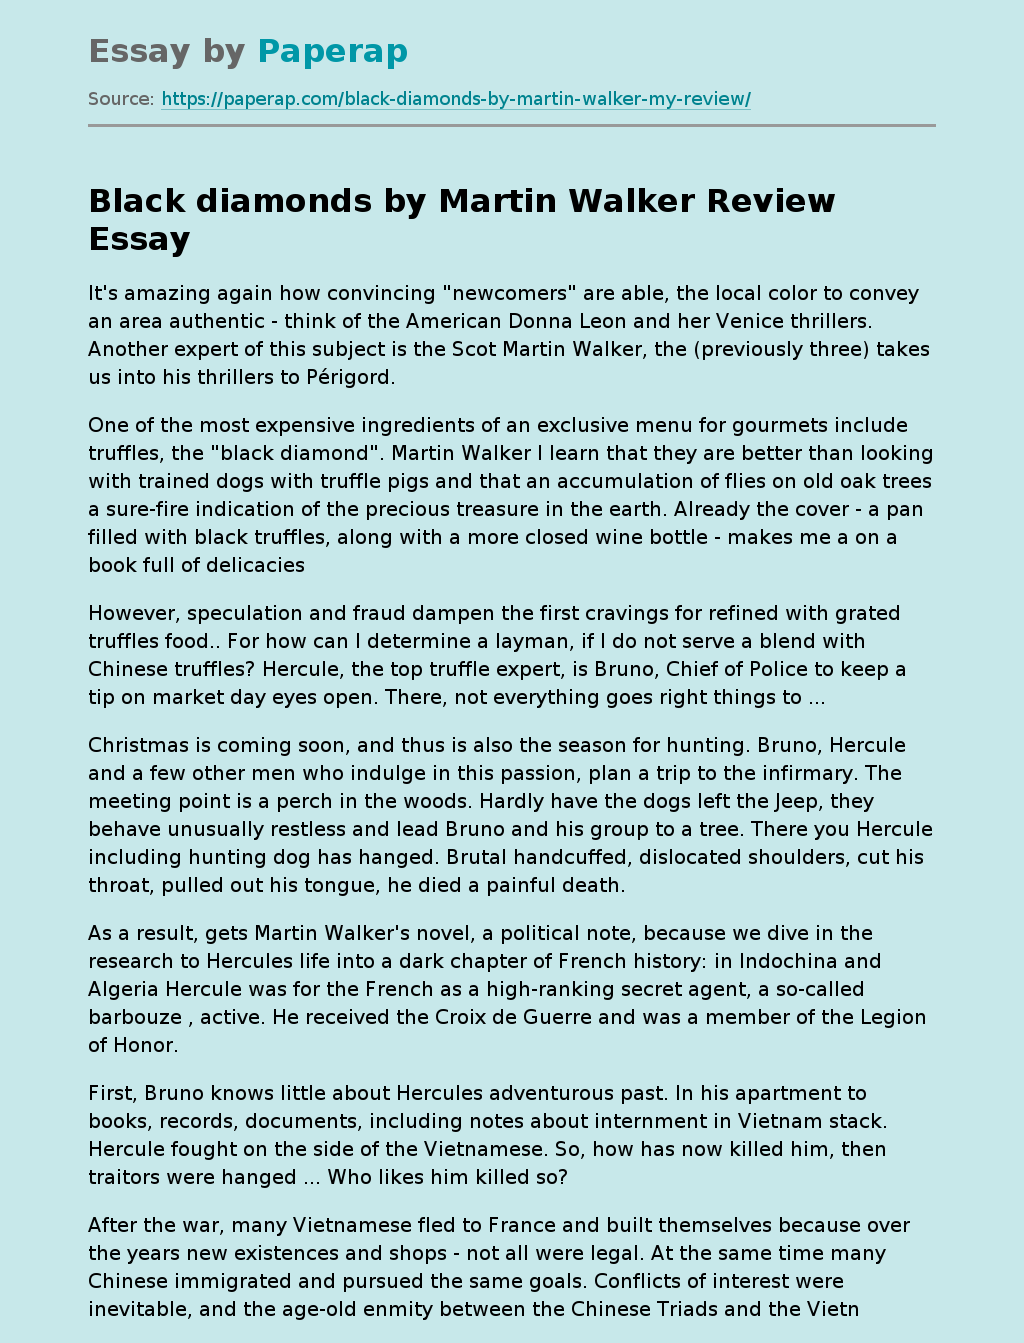 Black Diamonds by Martin Walker Review